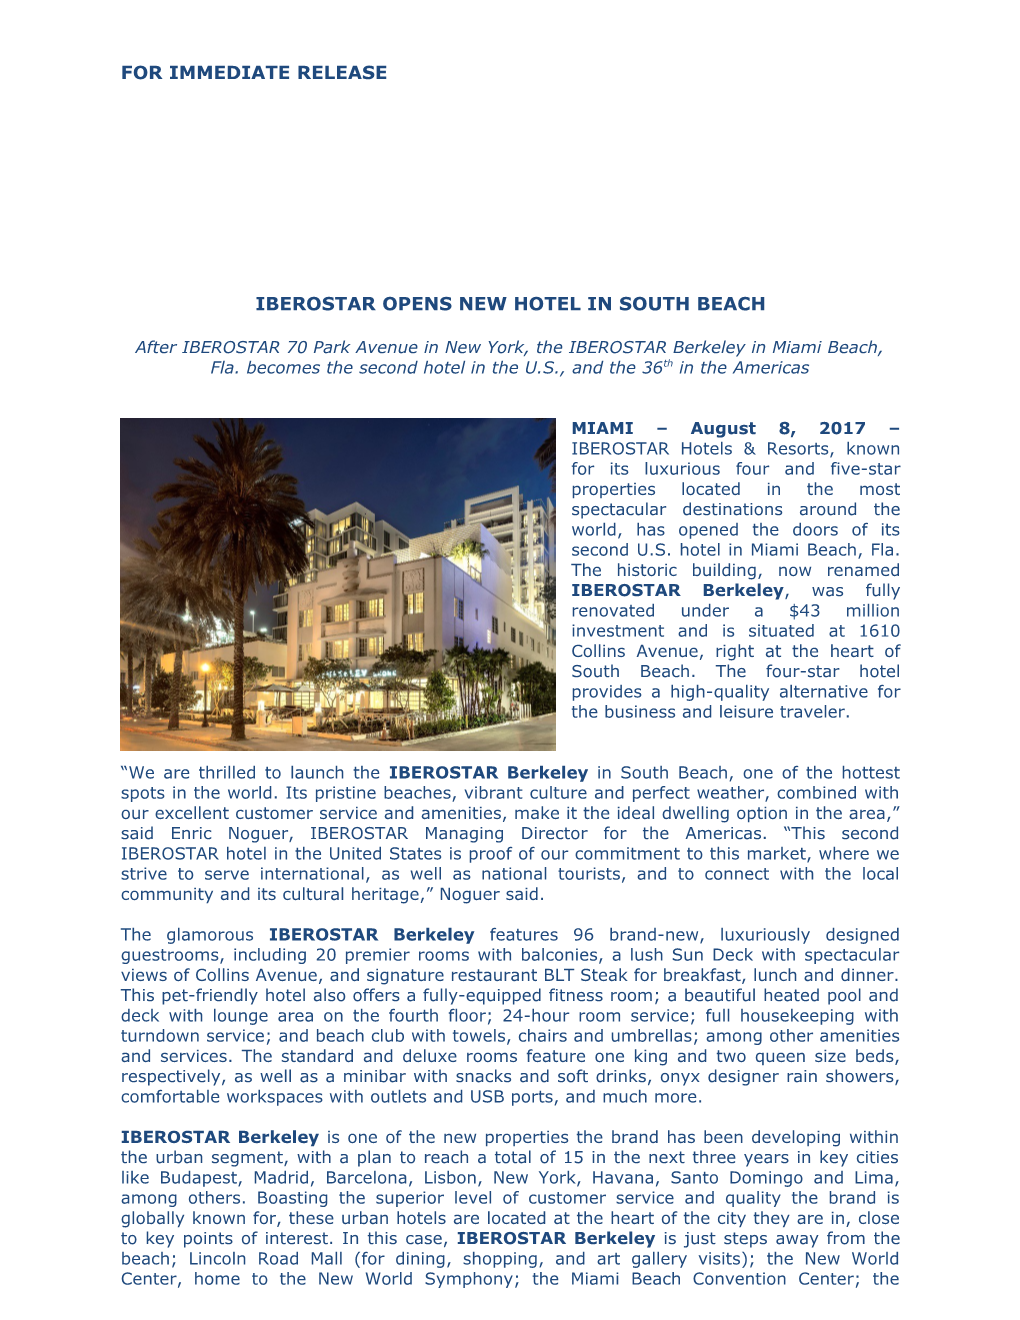 Iberostar Opens New Hotel in South Beach